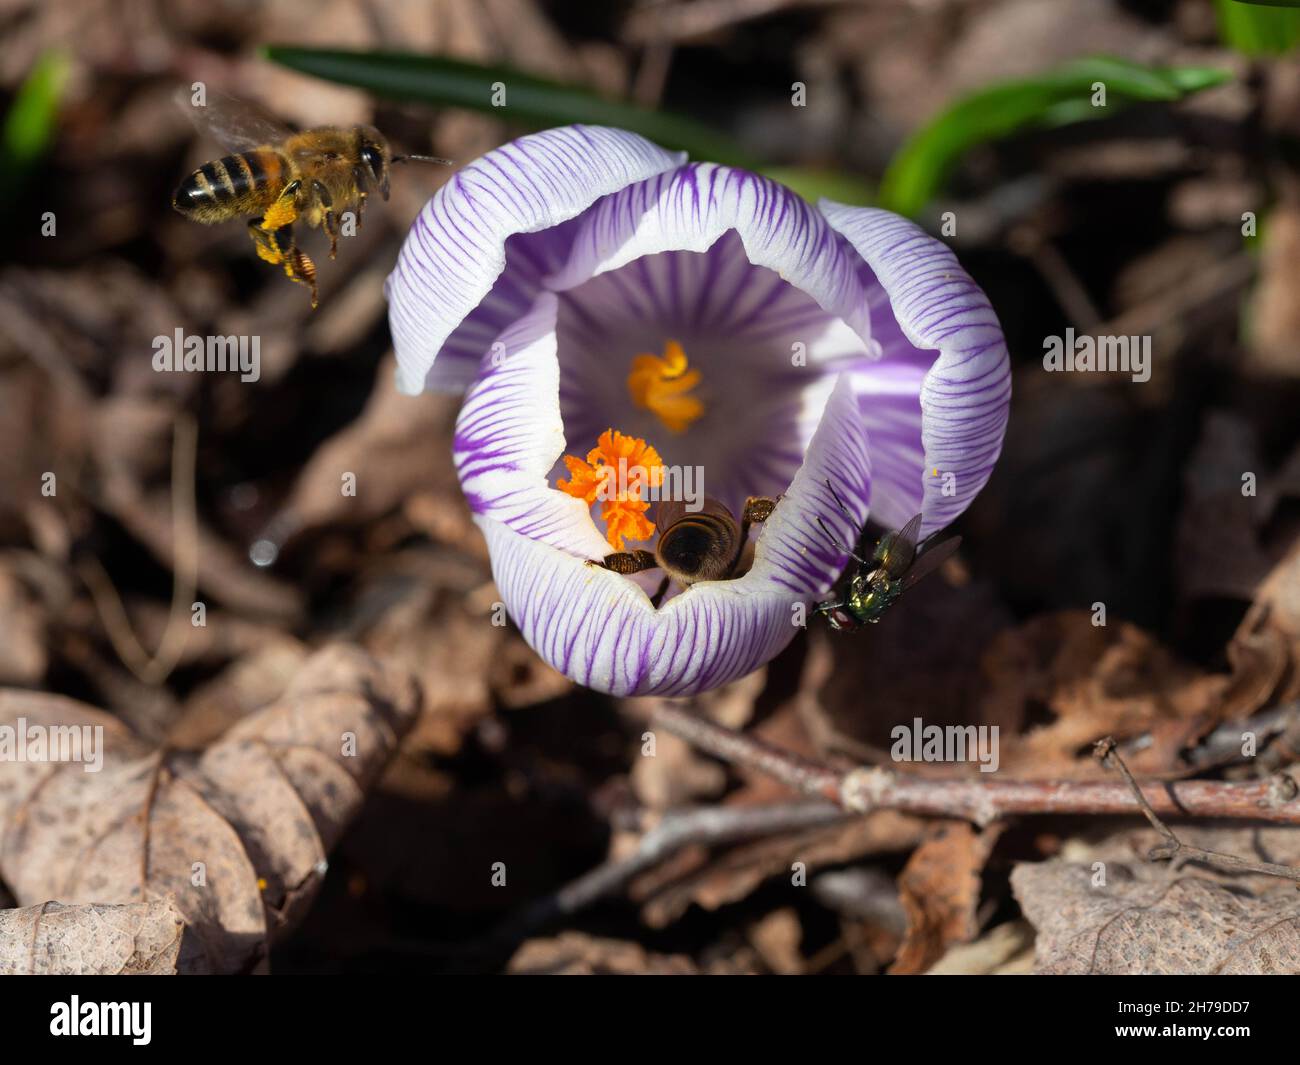 Pickwick crocus flower with honey bees Stock Photo